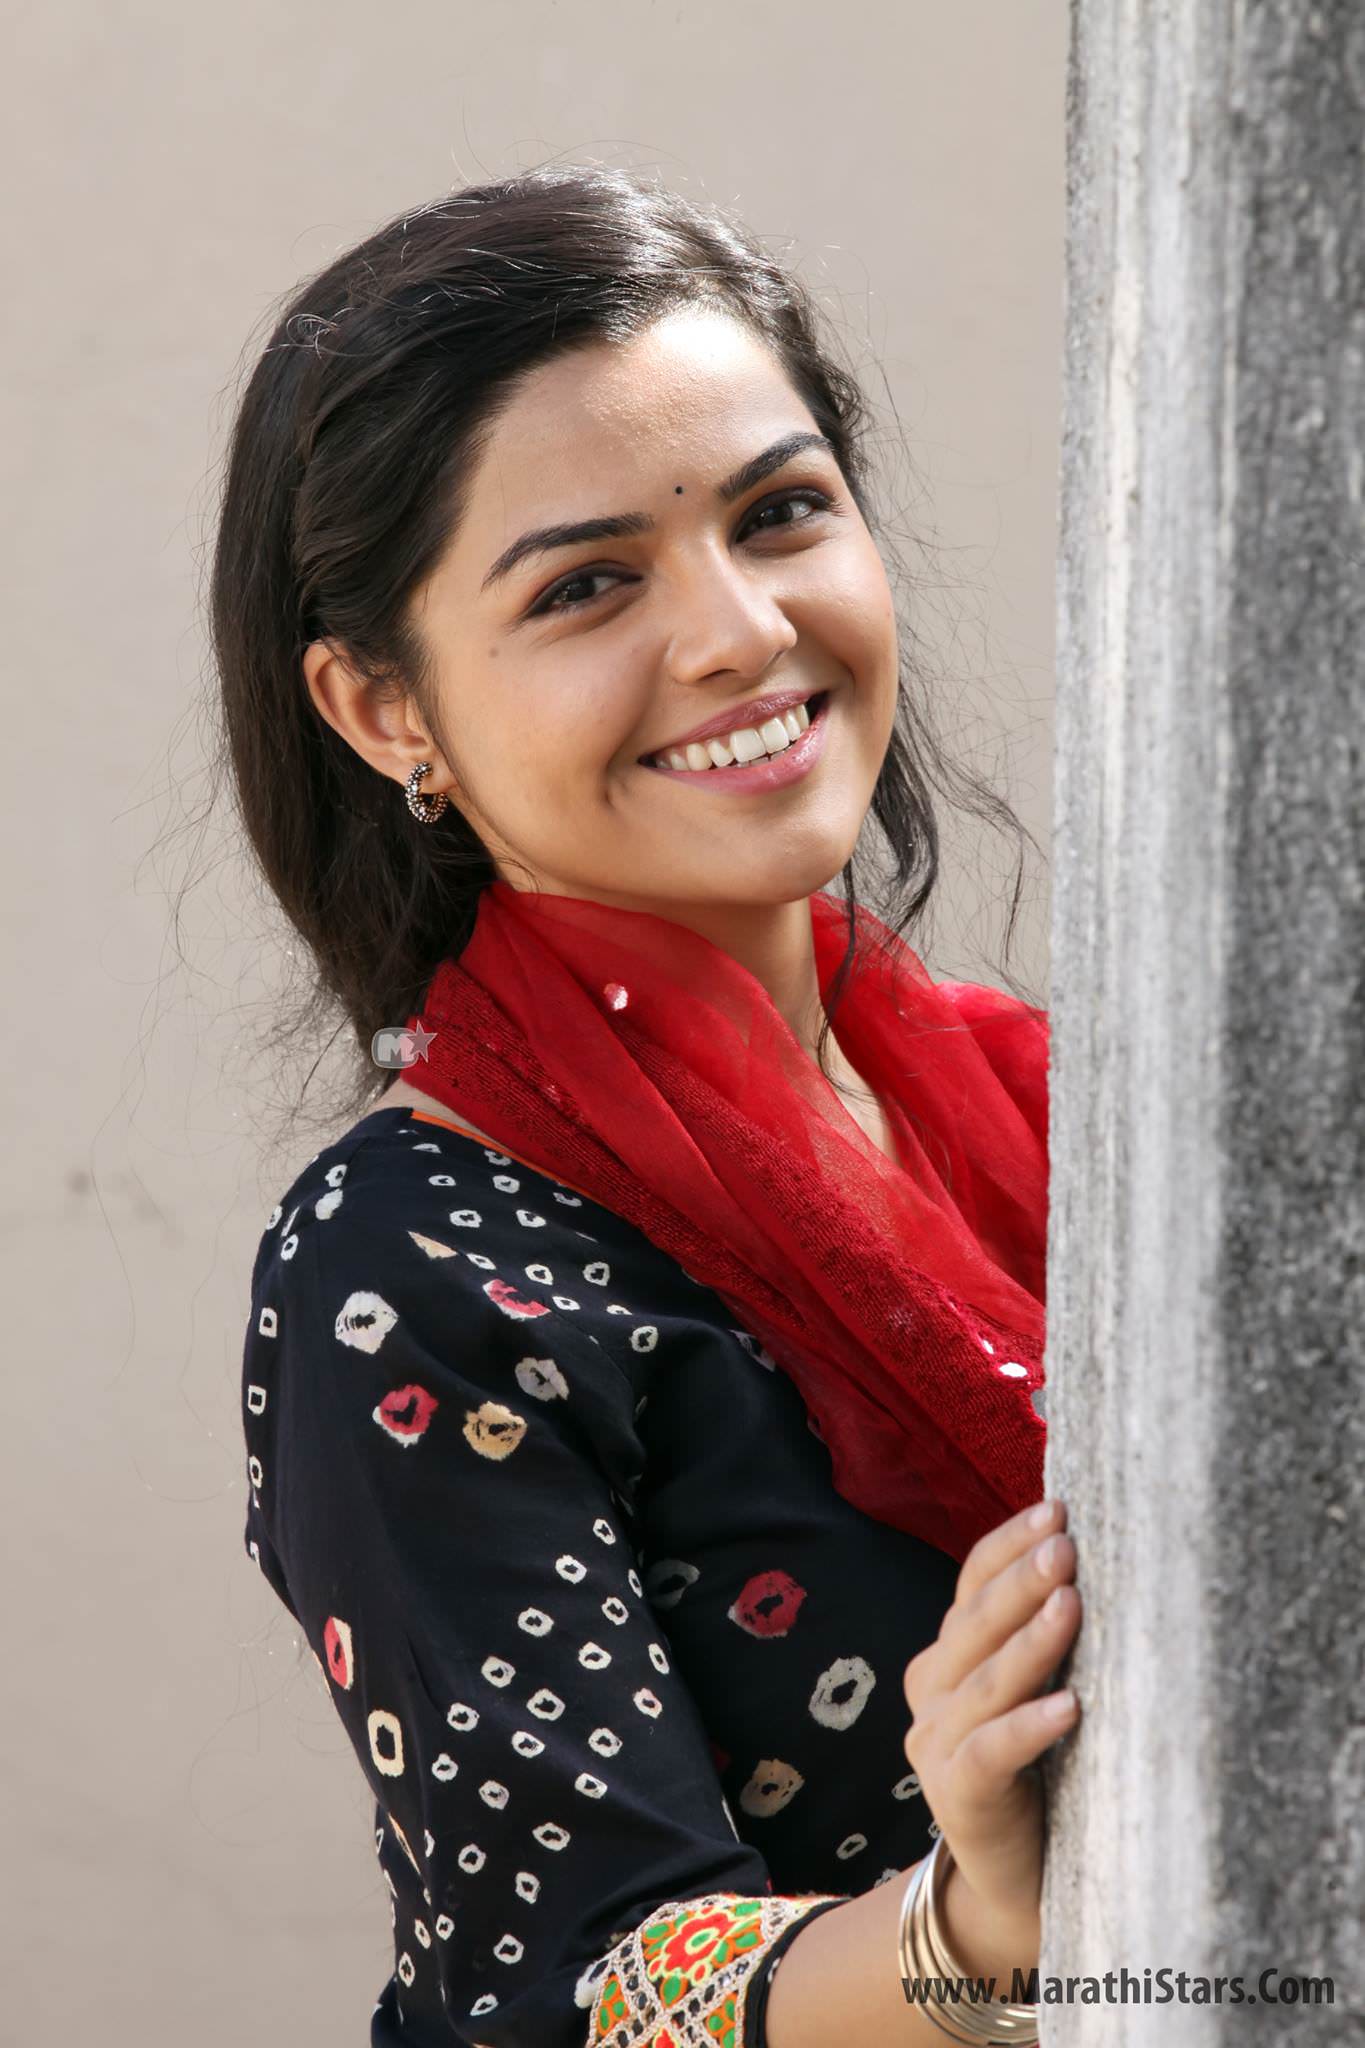 Aarya Ambekar Marathi Actress Singer Photo Bio Wiki Image Profile